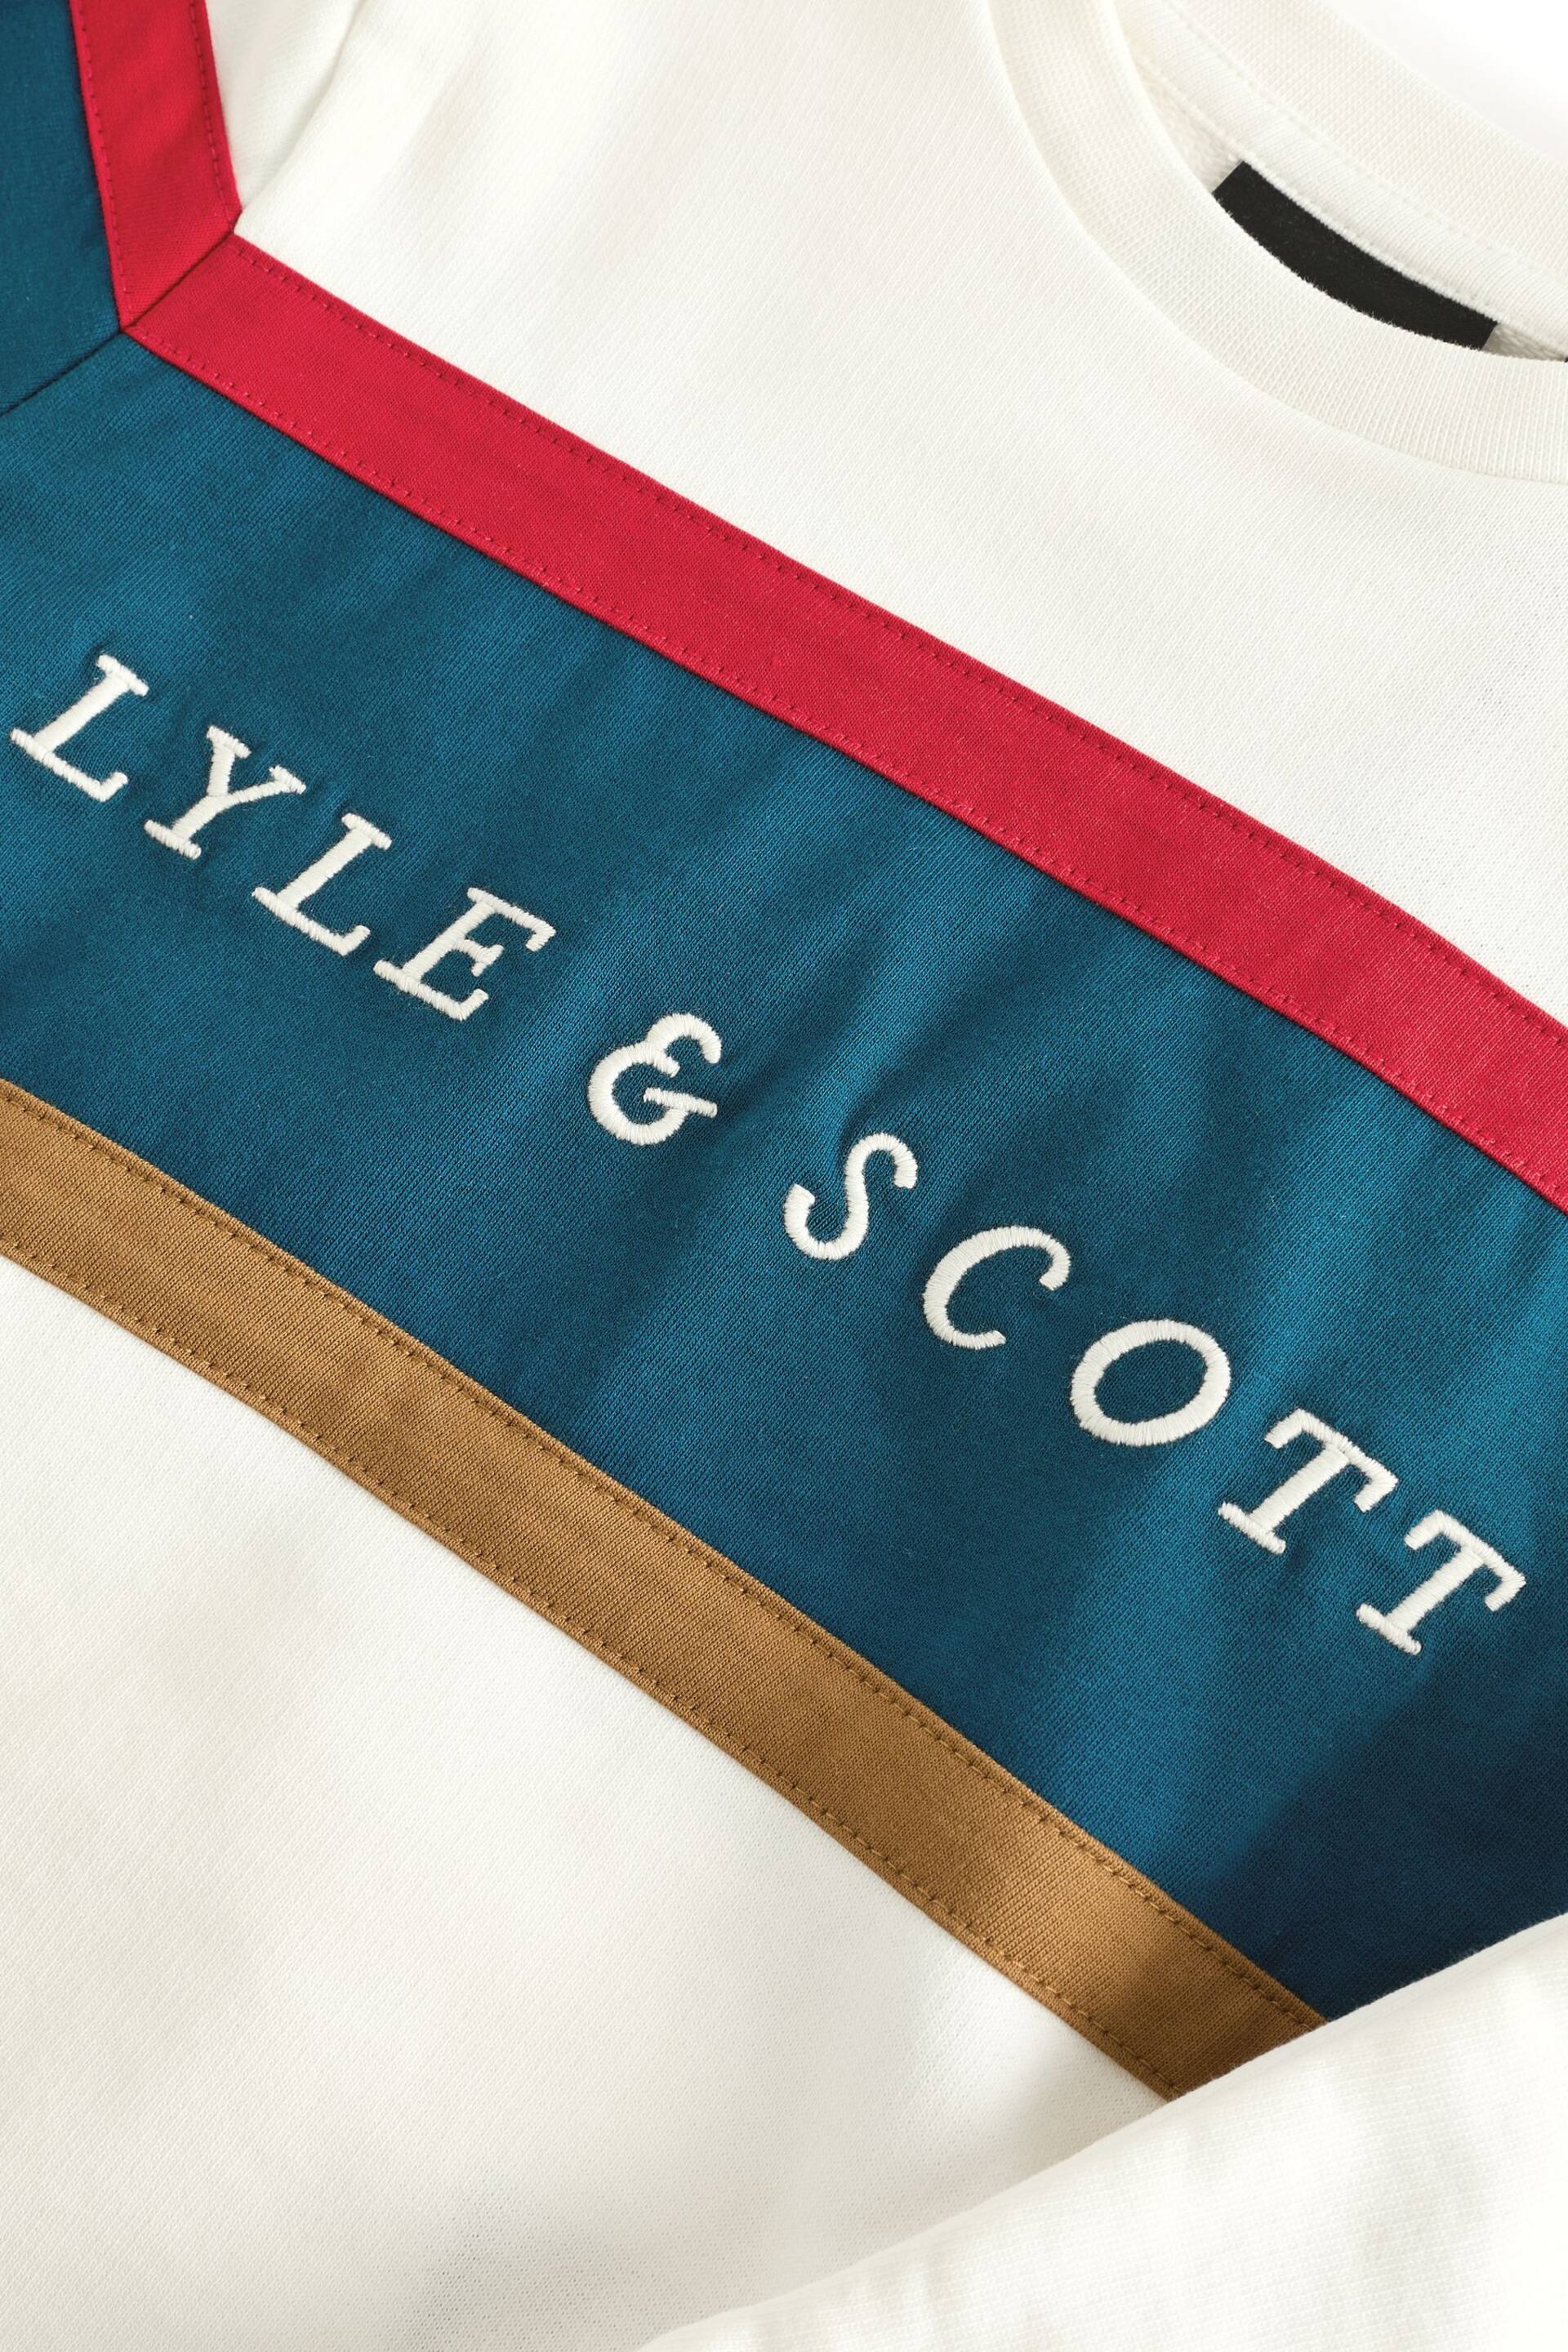 Lyle & Scott Boys Ecru White Volley Sweatshirt - Image 3 of 4